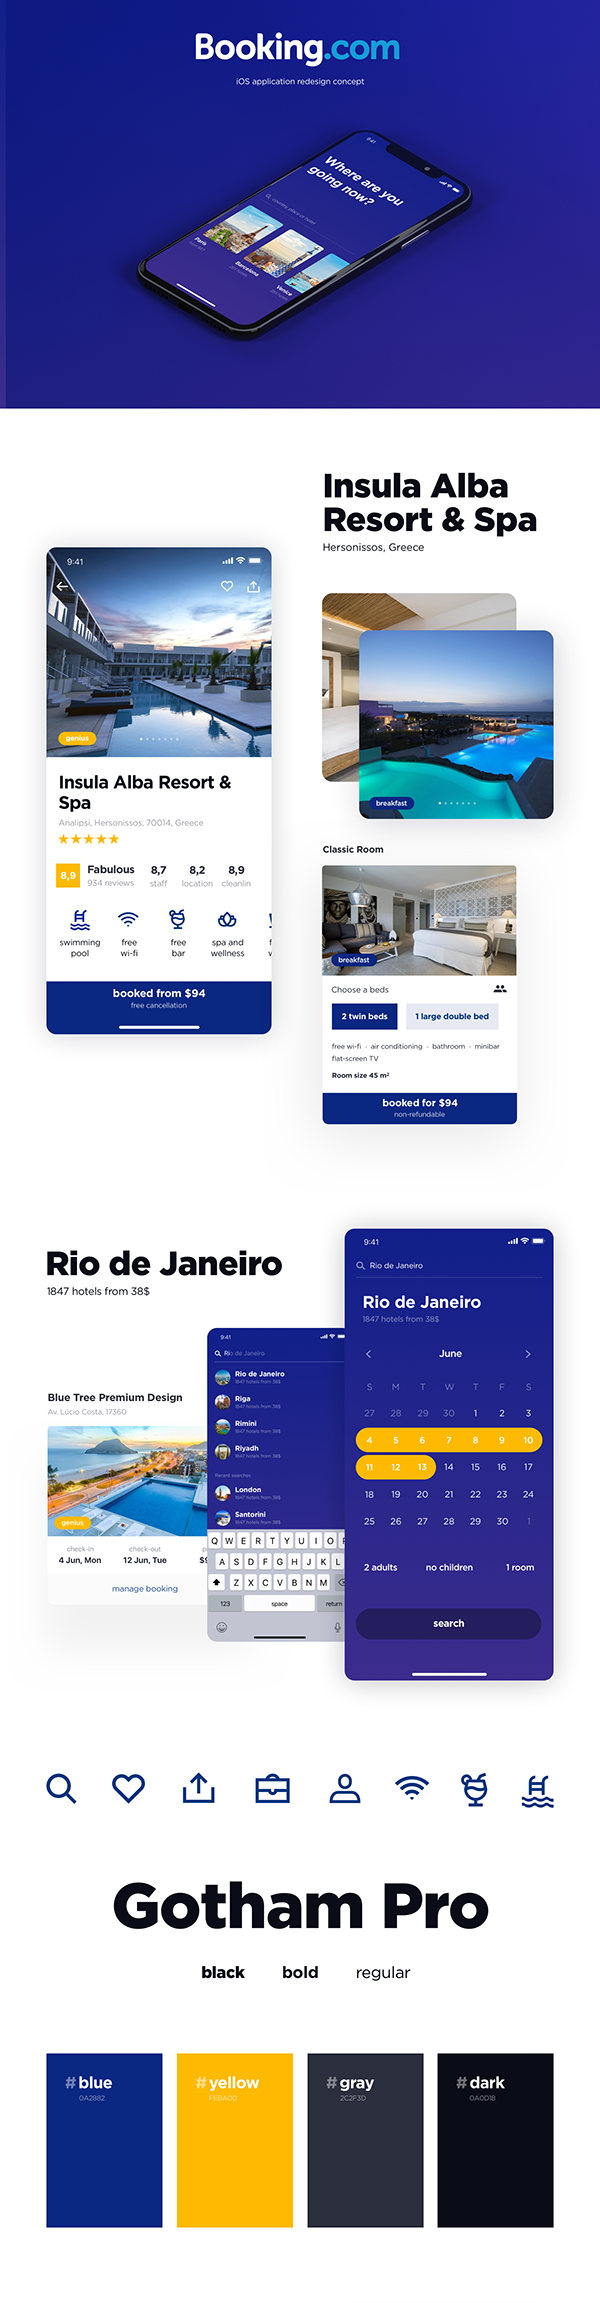 Booking.com app concept